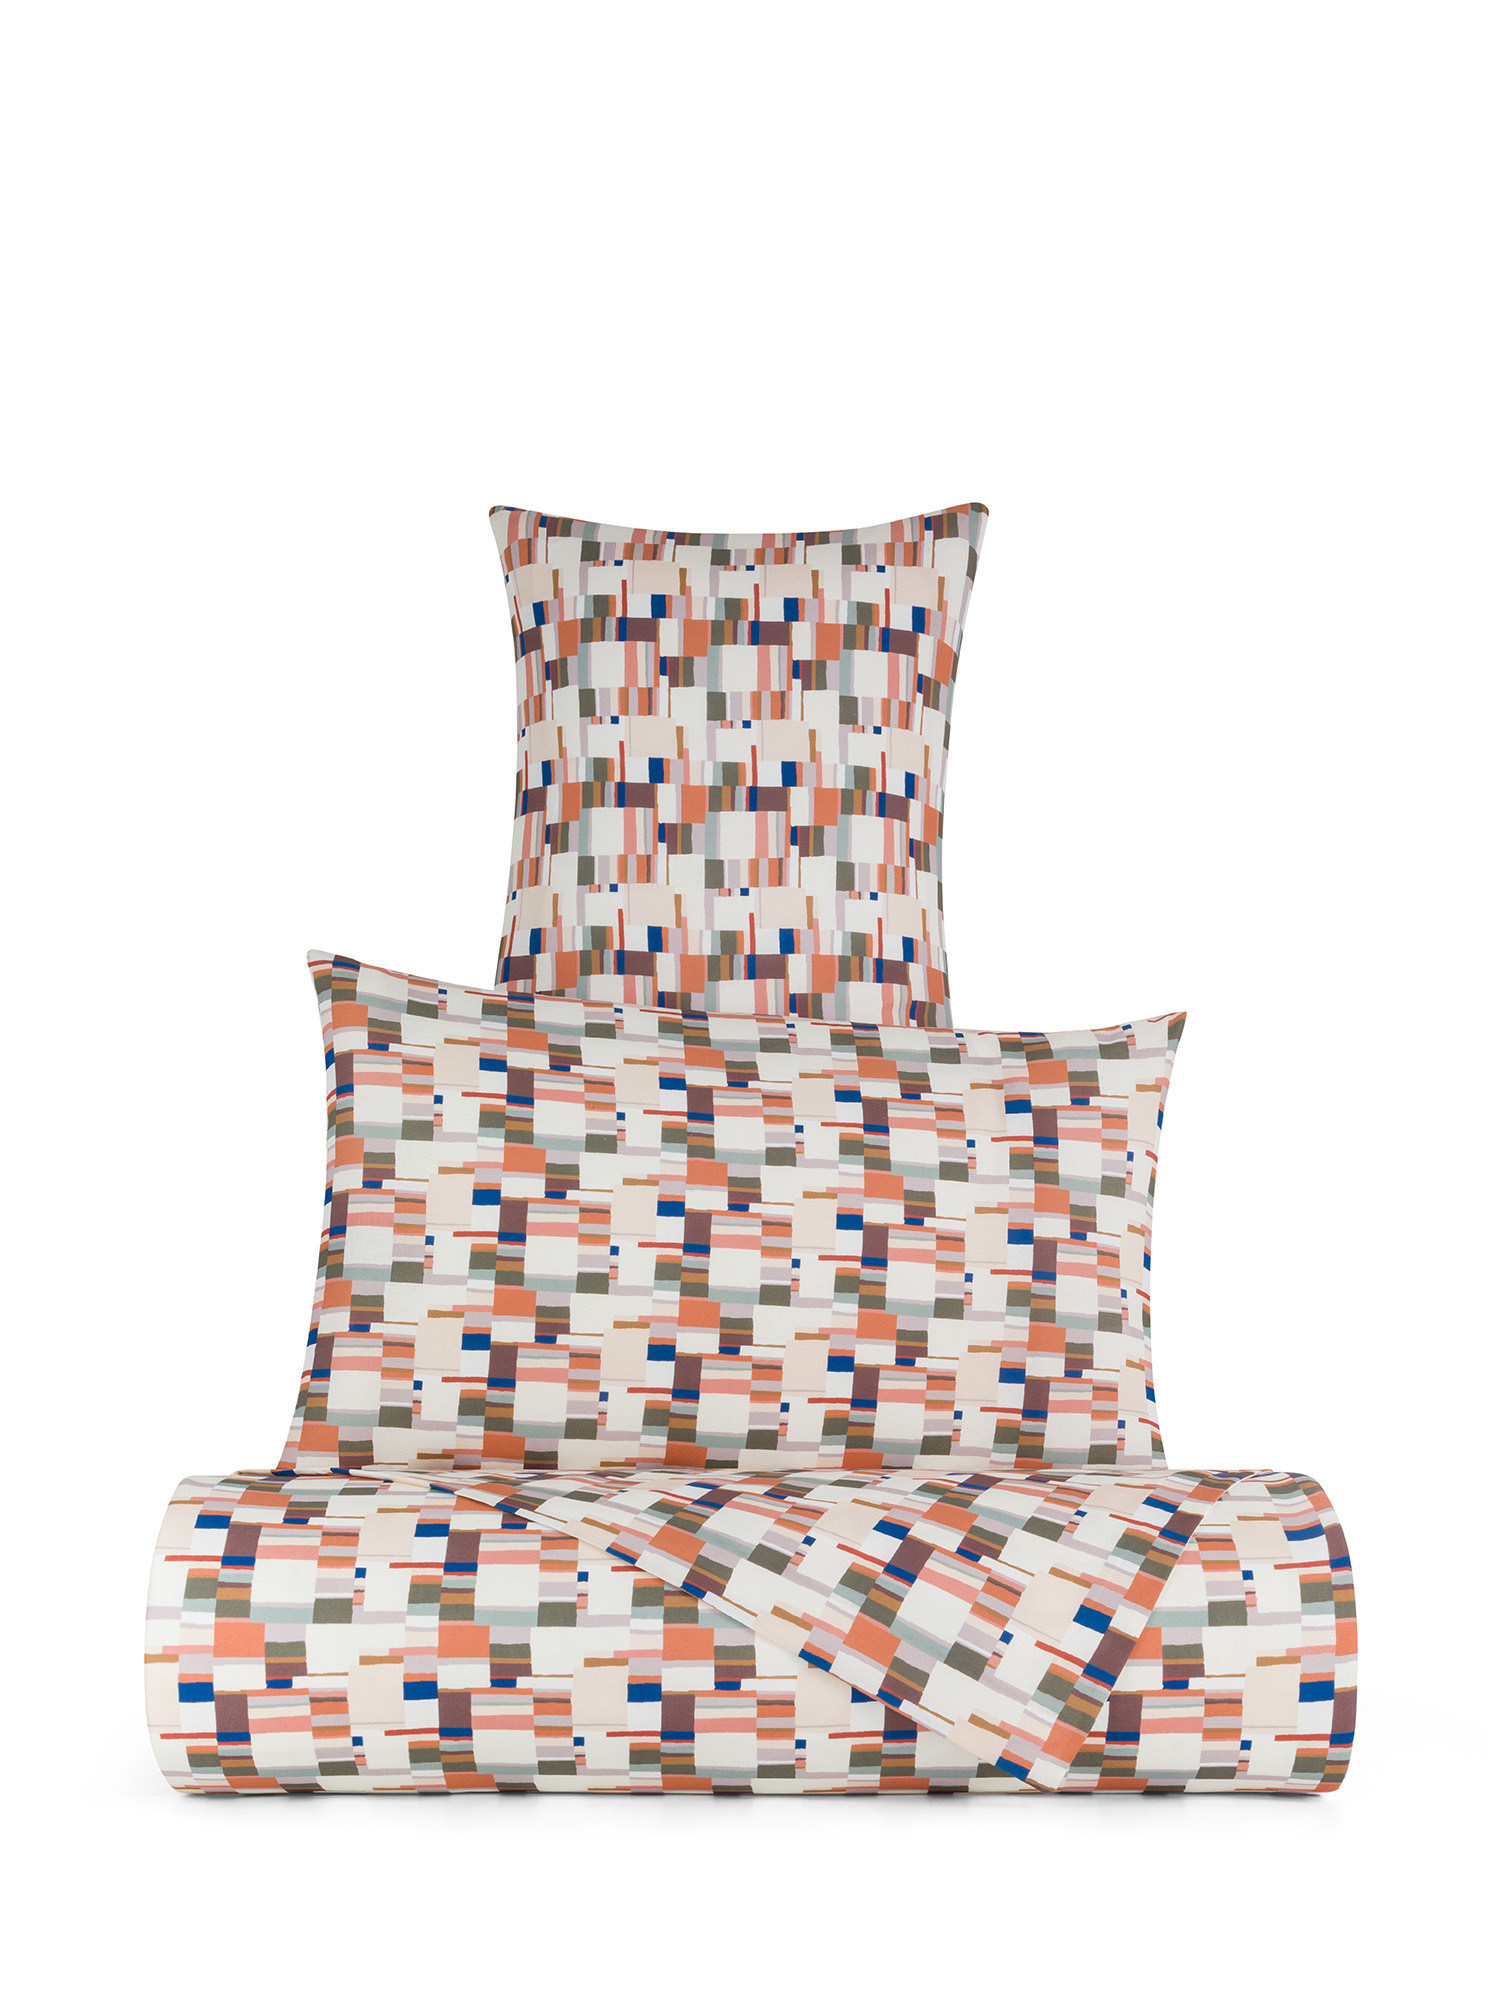 Geometric patterned cotton sheet set, Multicolor, large image number 0